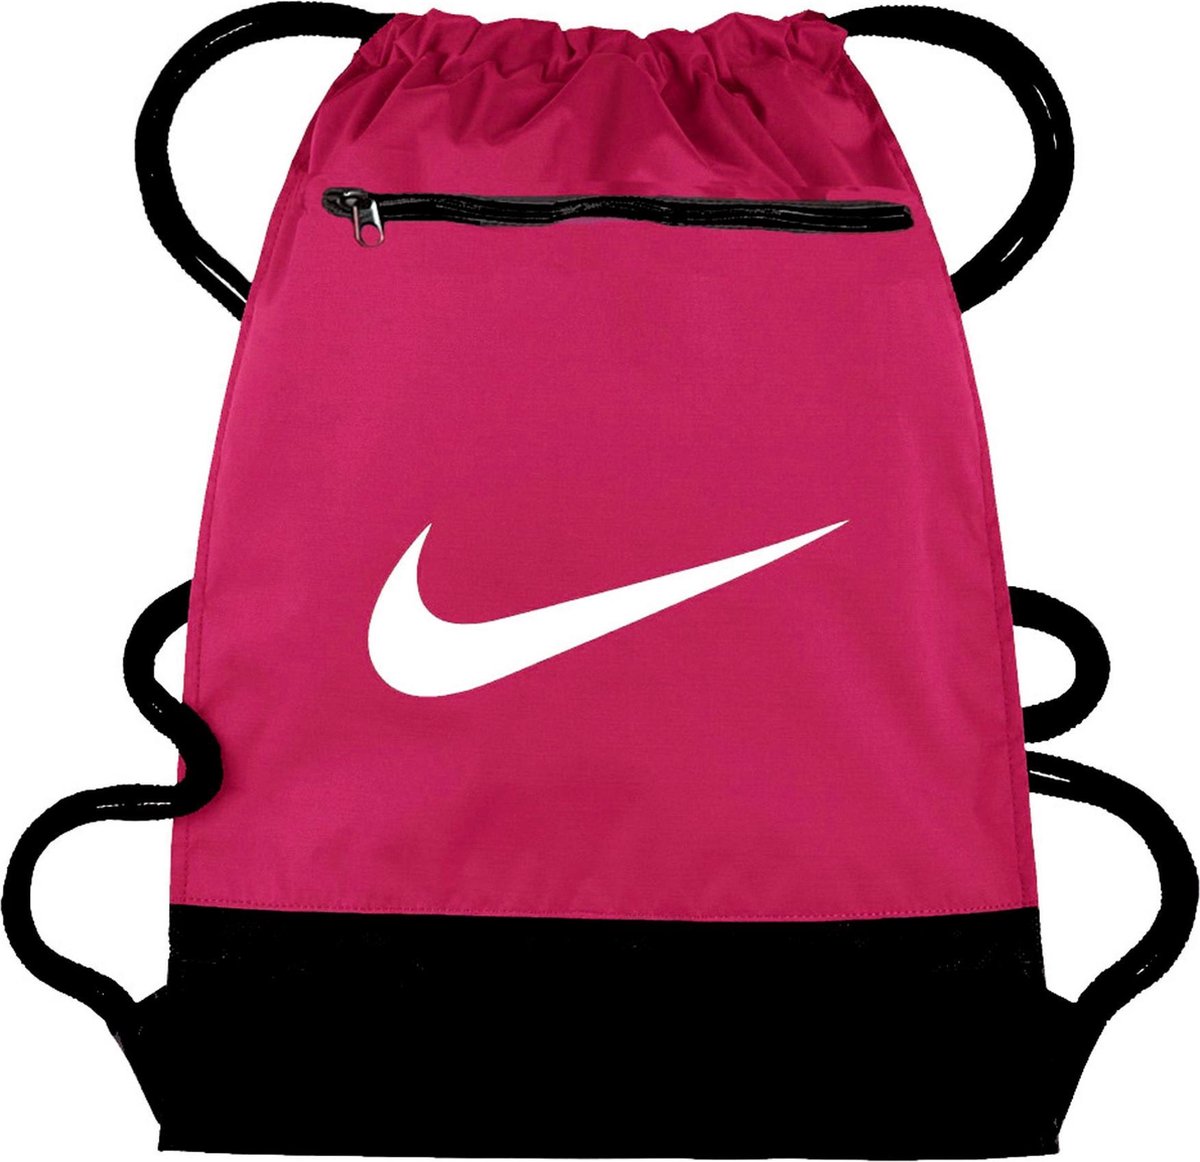 Sac à dos Nike - UnisexeEnfants et adultes - rose / noir / blanc | bol.com